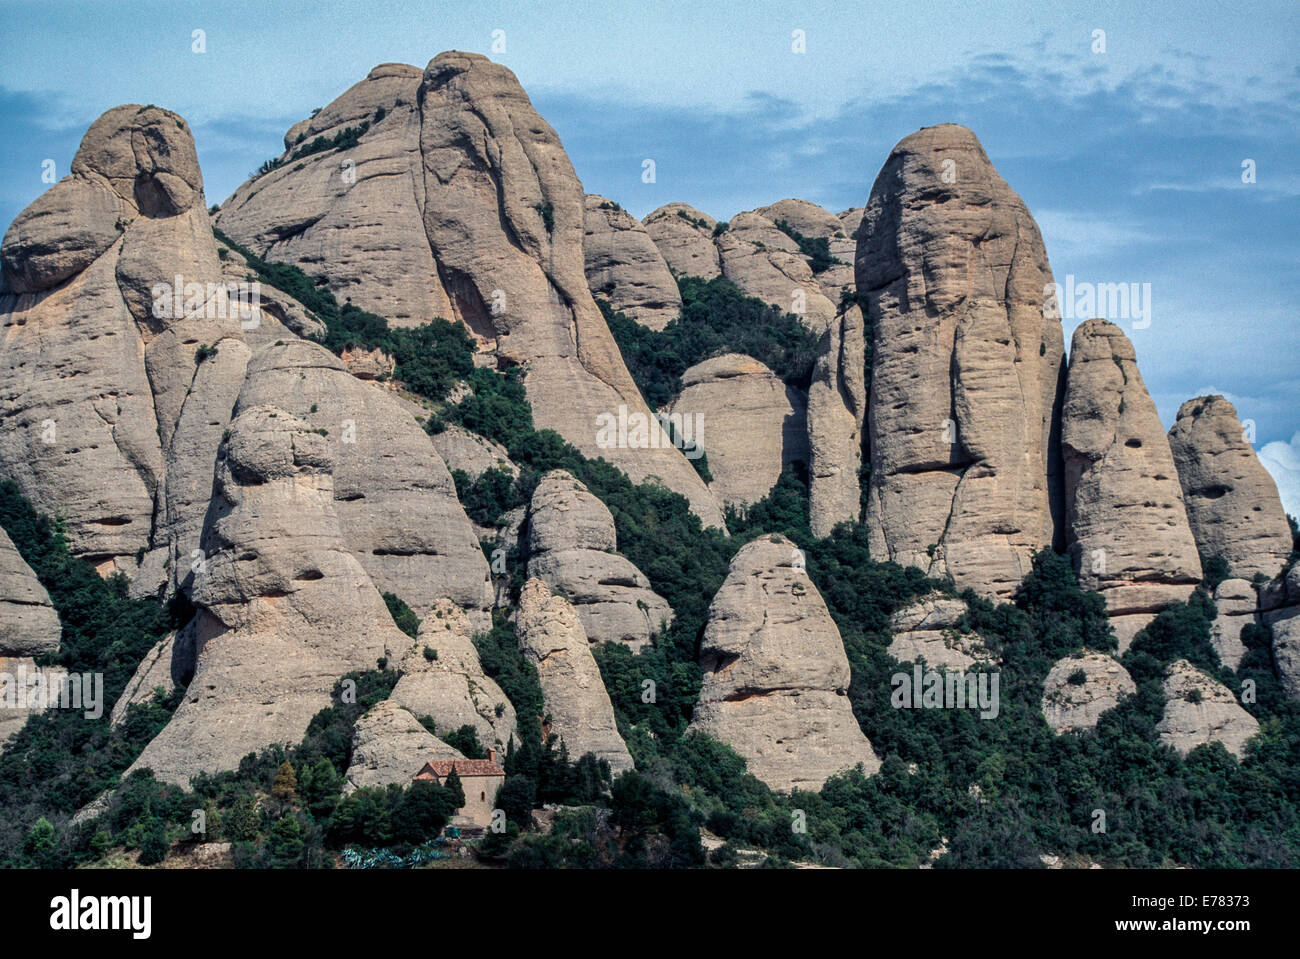 Elephant Rock Montserrat, multi-peaked mountains located near the city of Barcelona, in Catalonia, Spain Europe Stock Photo